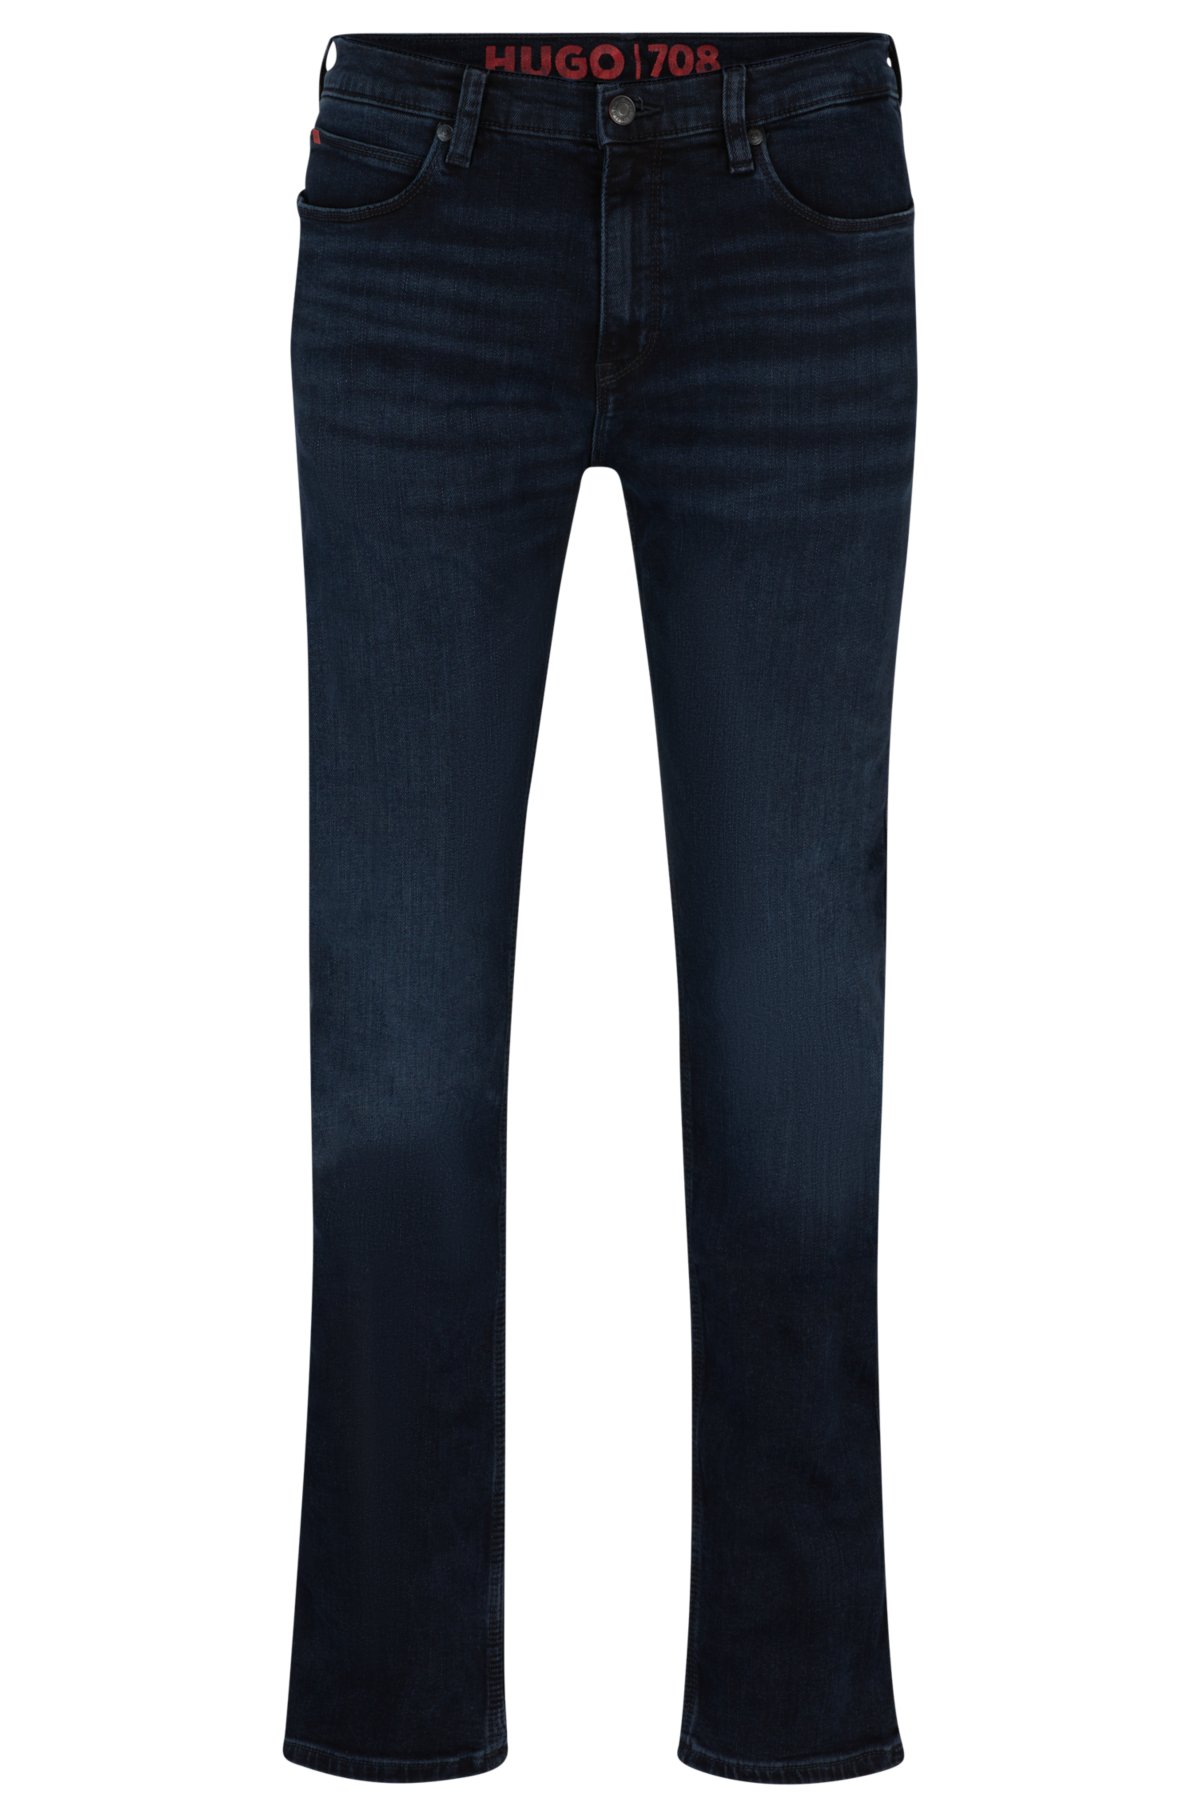 HUGO jeans in blue-black stretch denim